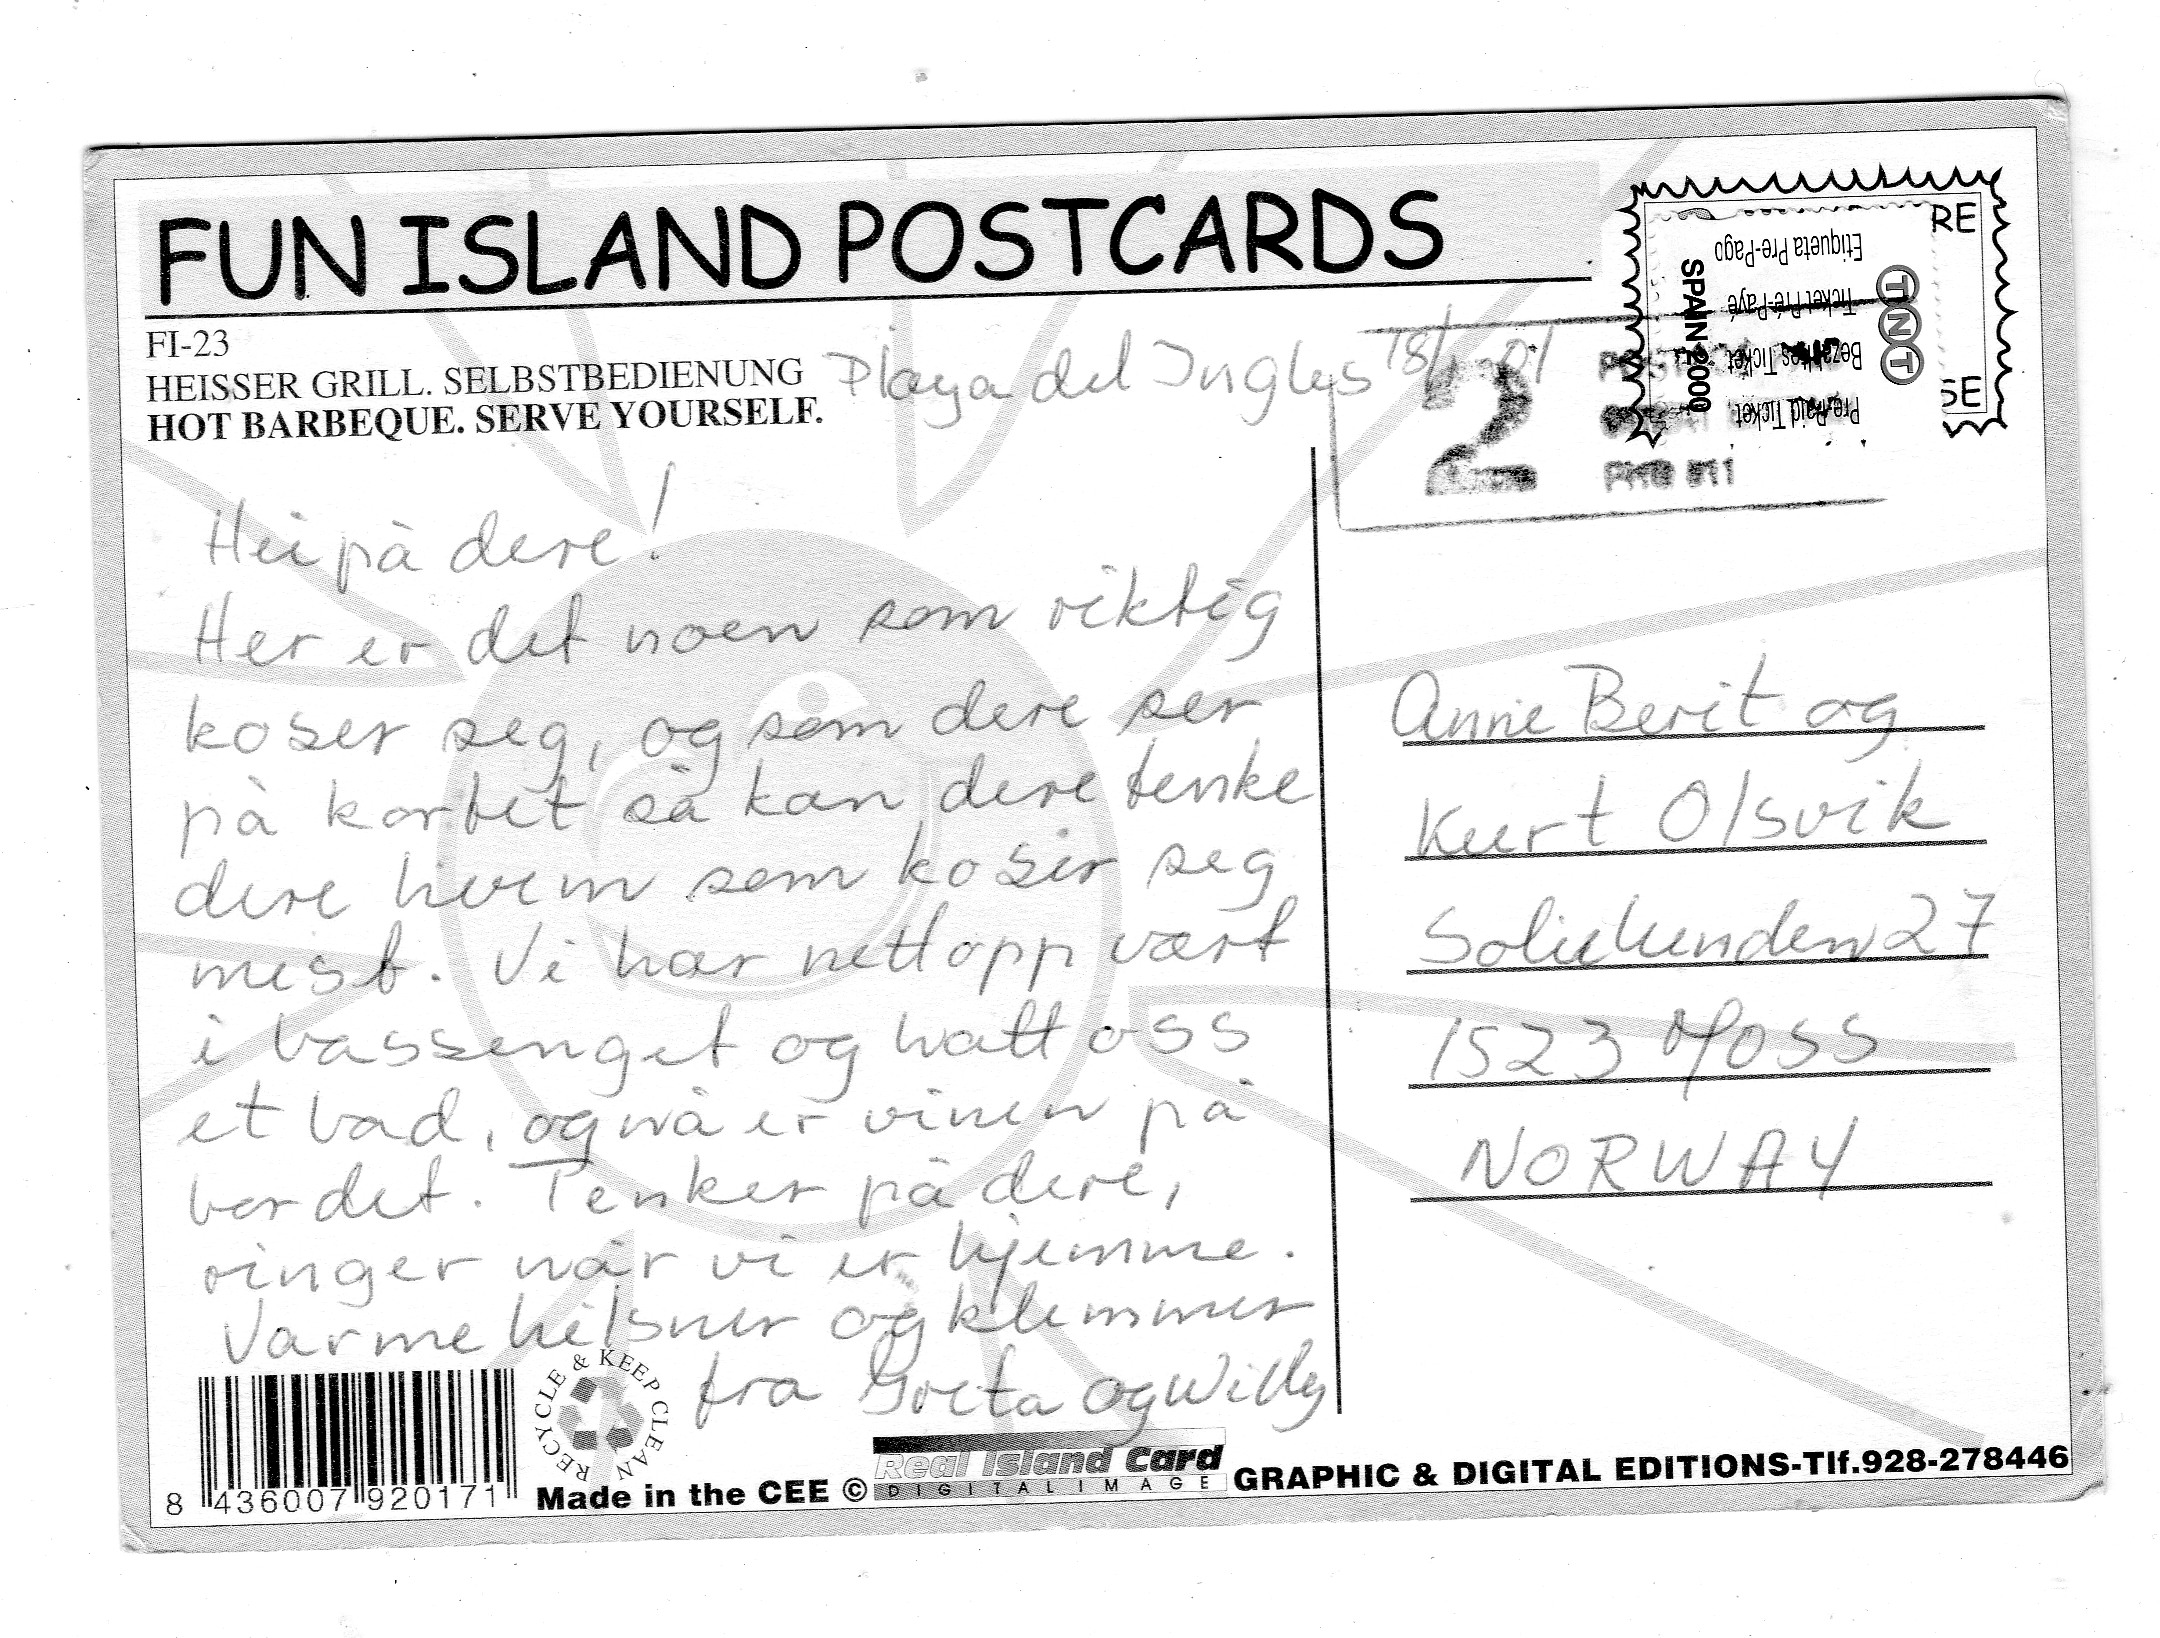 Hot BBQ Fun Island postcards